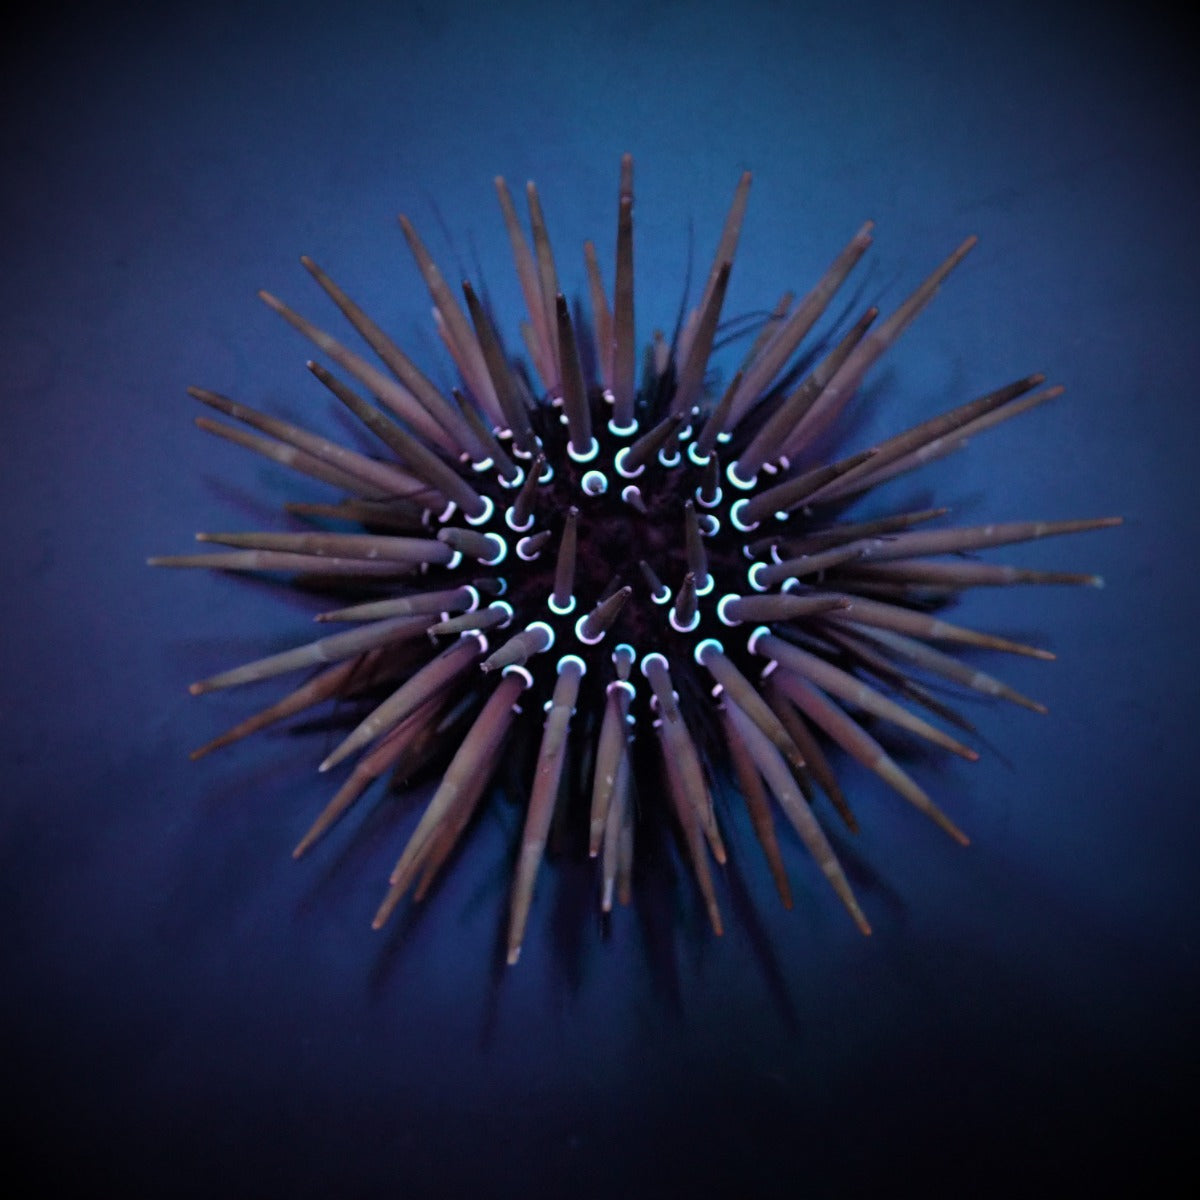 Parasalenia gratiosa - Parasalenia urchin